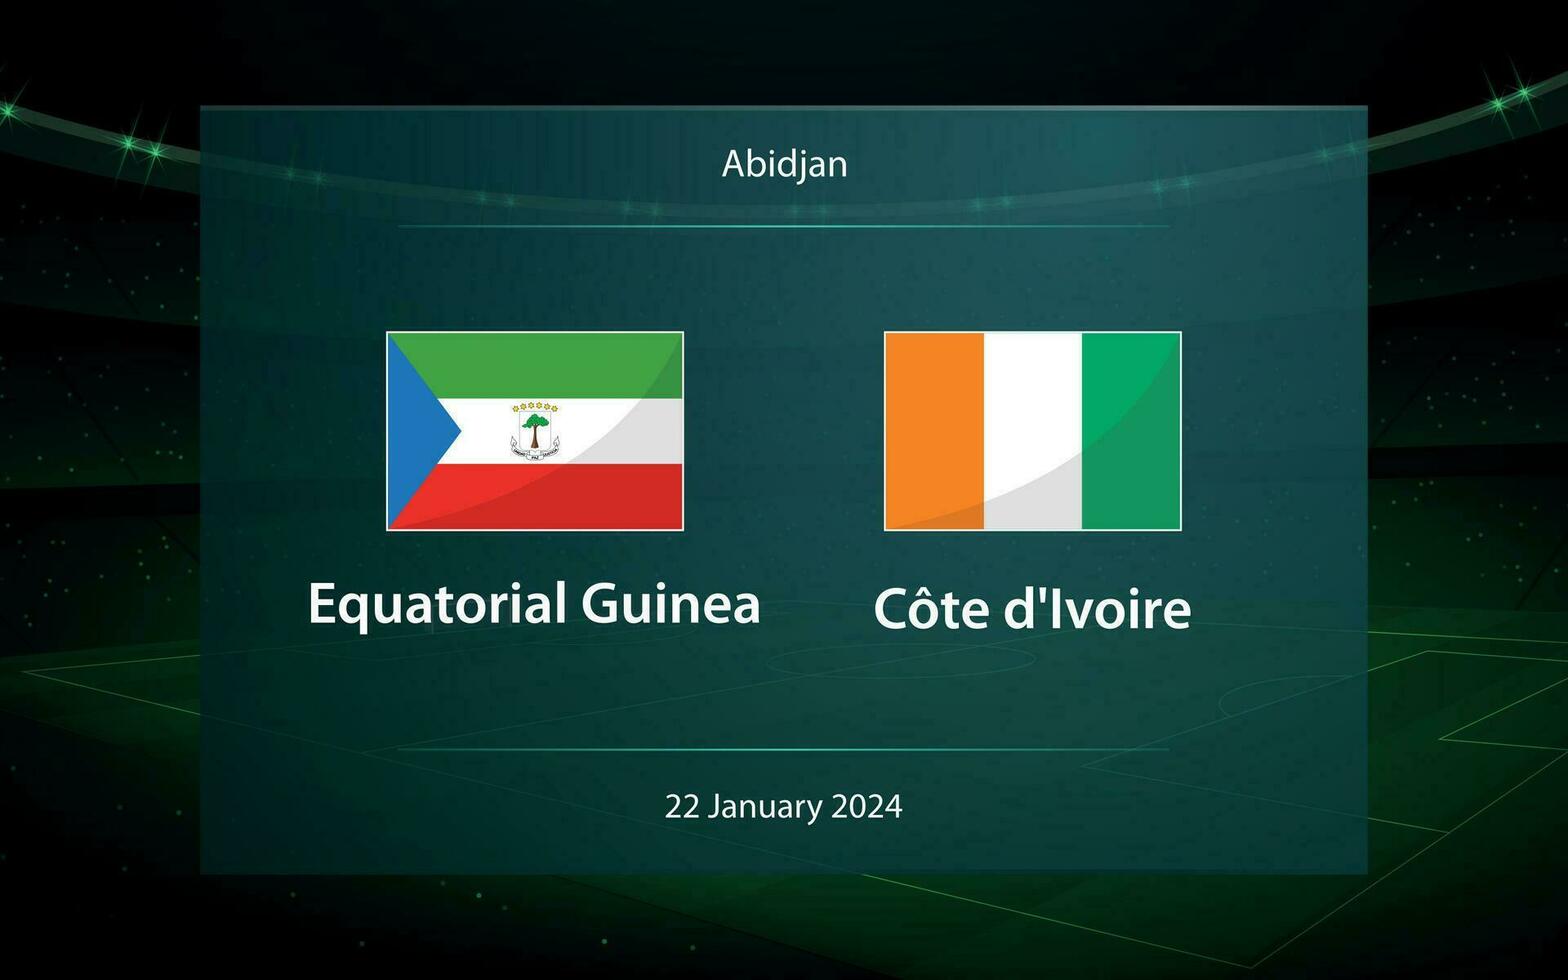 Equatorial Guinea vs Ivory Coast. Football scoreboard broadcast graphic vector